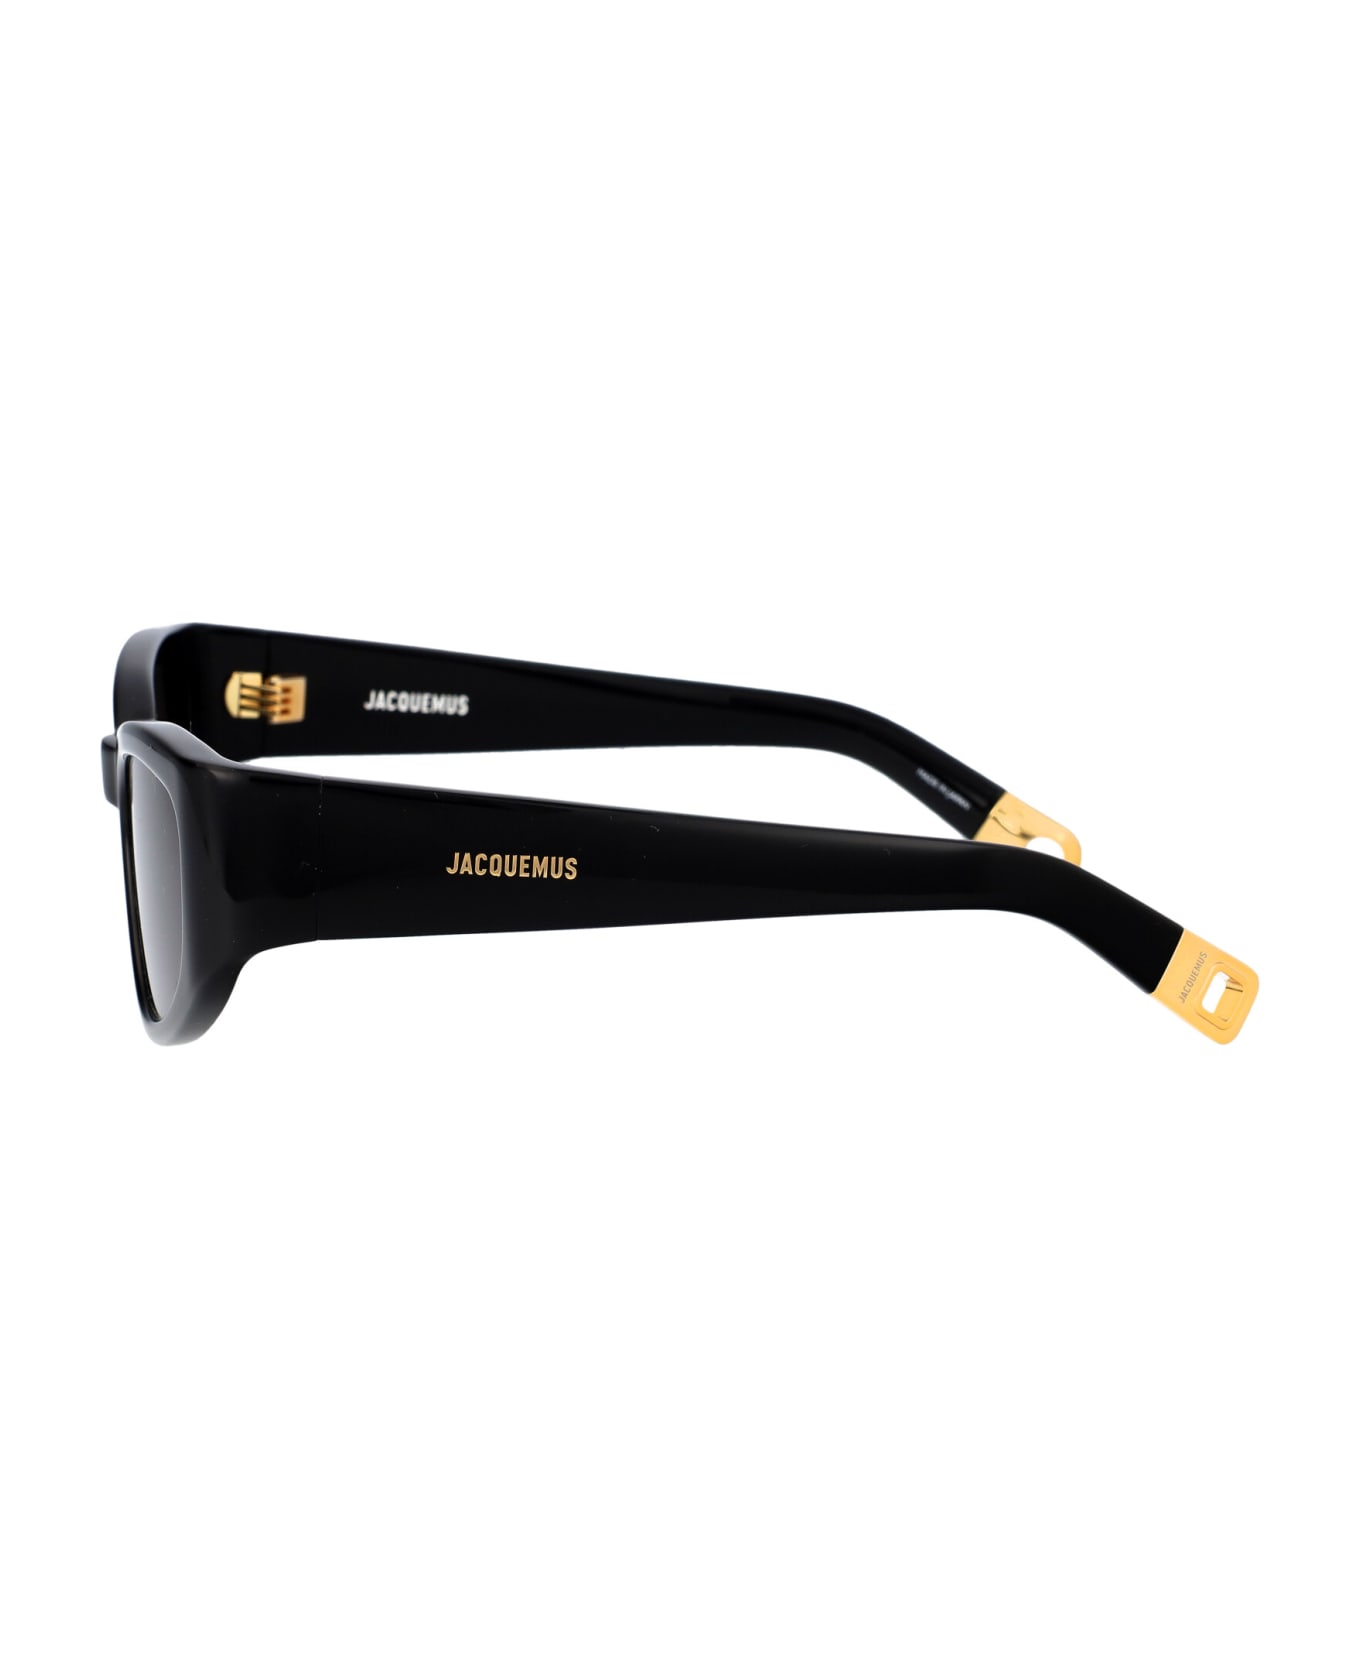 Jacquemus Gala Sunglasses - 01 BLACK/ YELLOW GOLD/ GREY